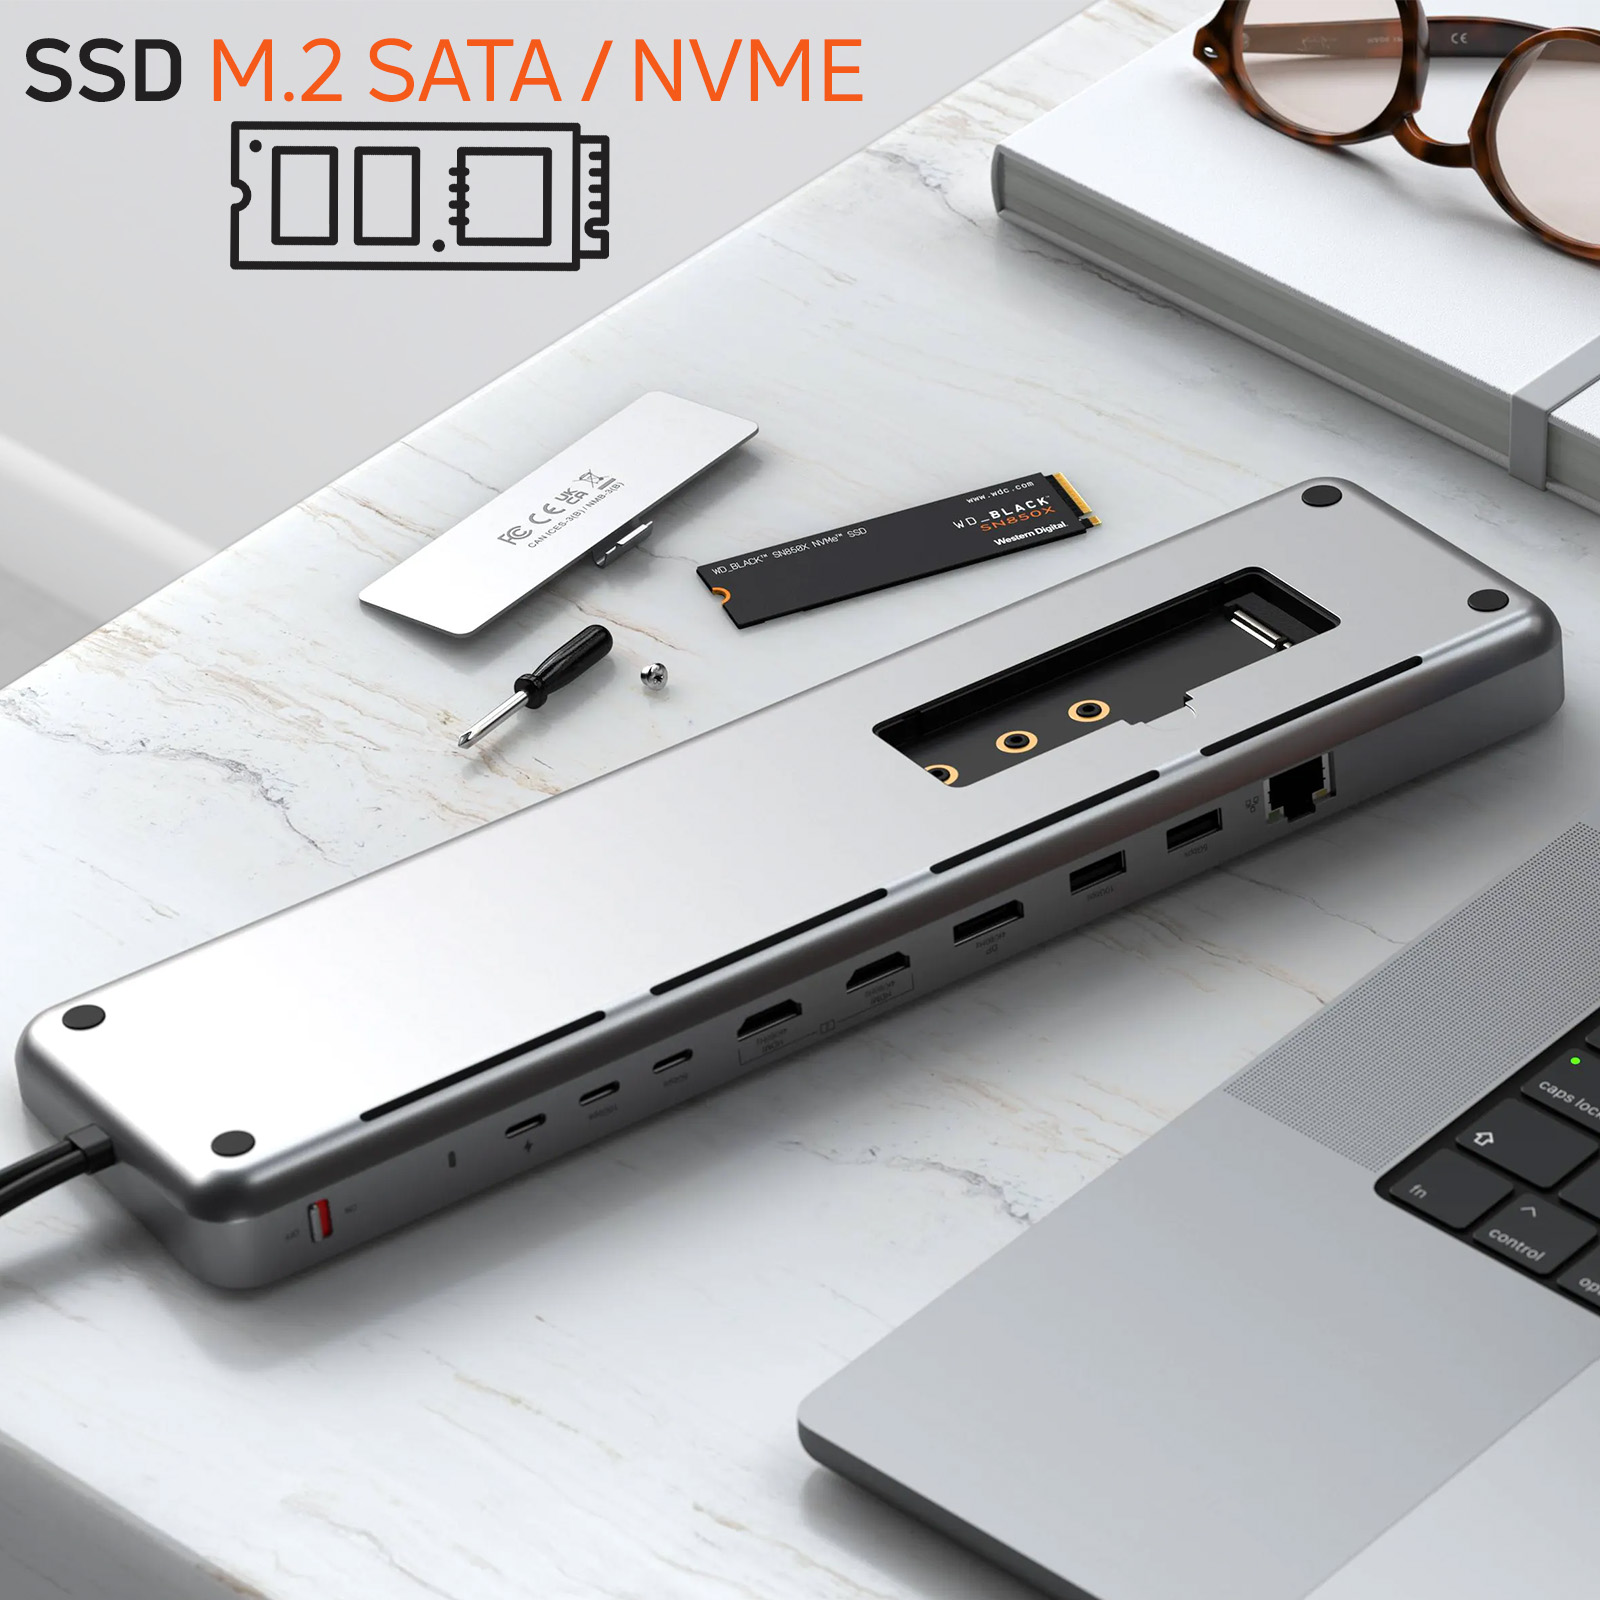 SATECHI ST-DDSM USB-Hub Apple, Grau